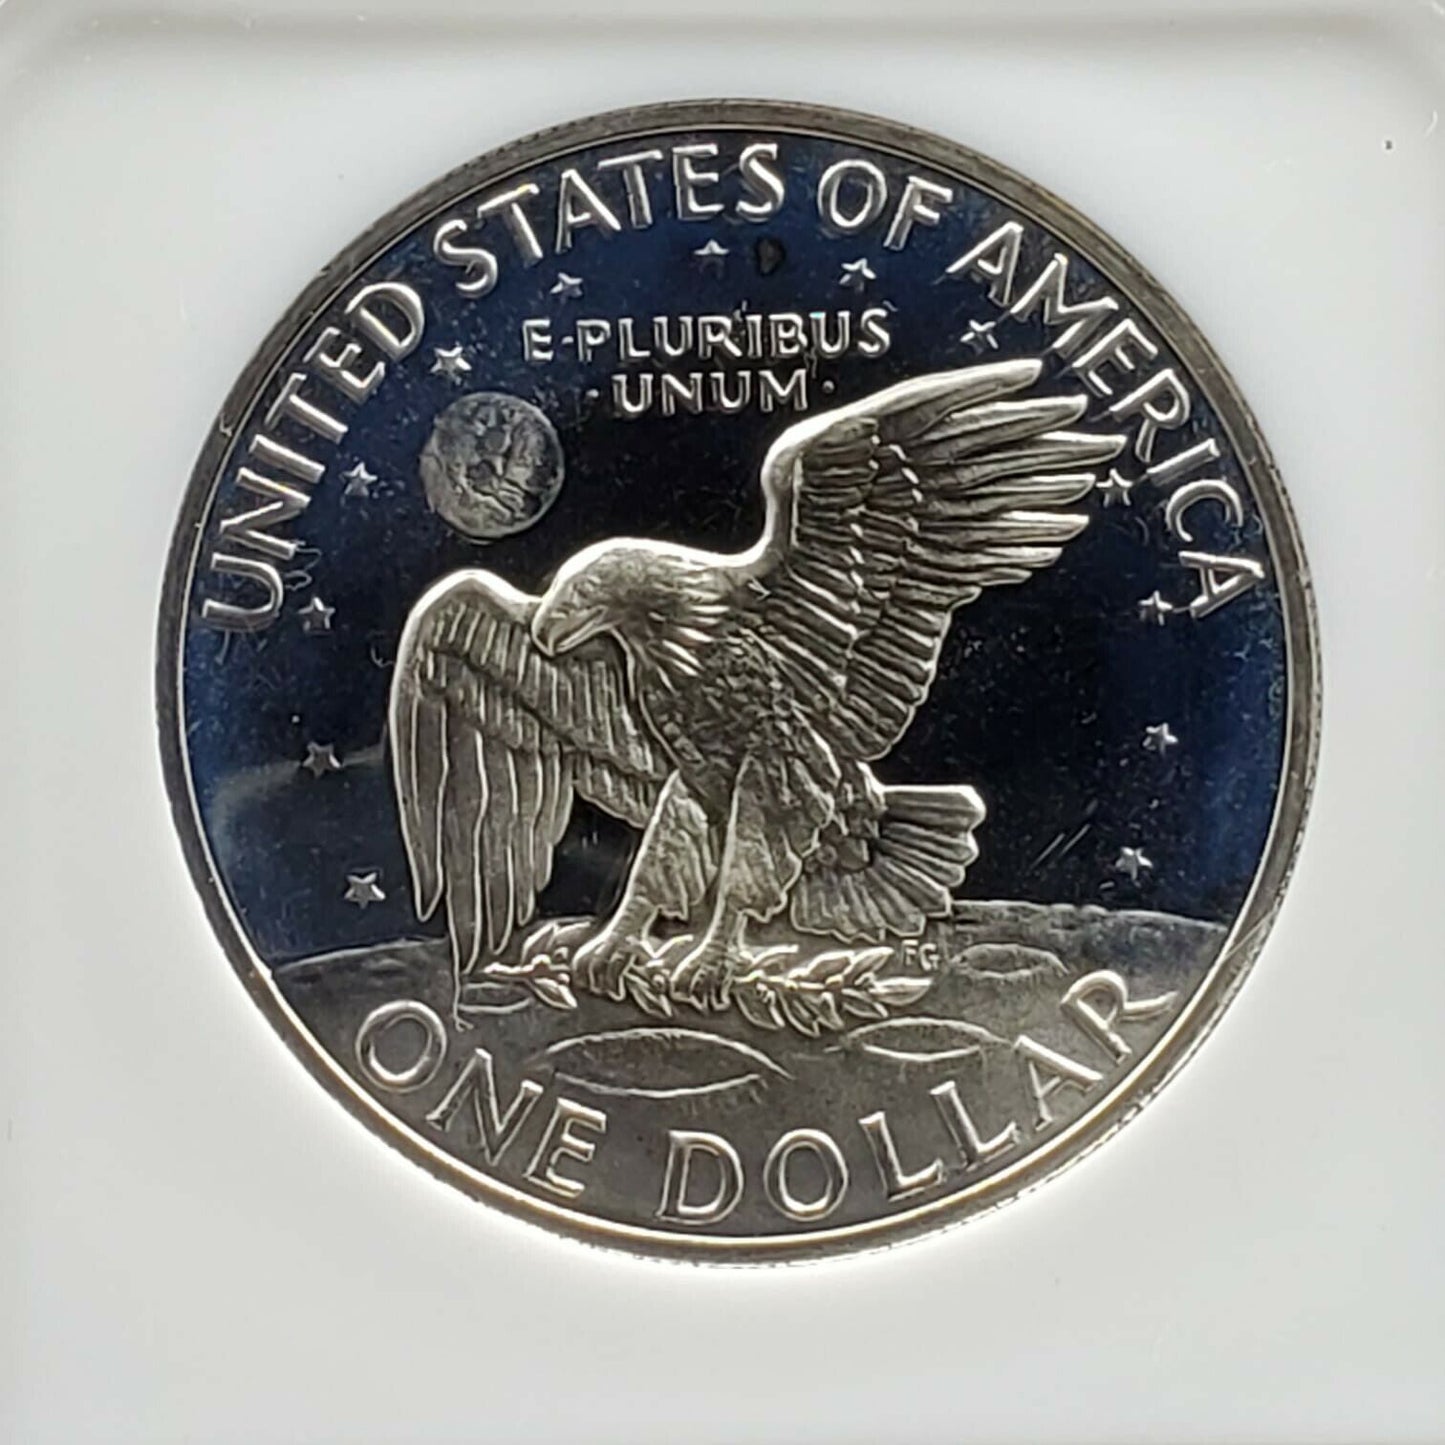 1971 S $1 Ike Eisenhower Silver Dollar Coin NGC PF69 UCAM DCAM Fat Holder PQ